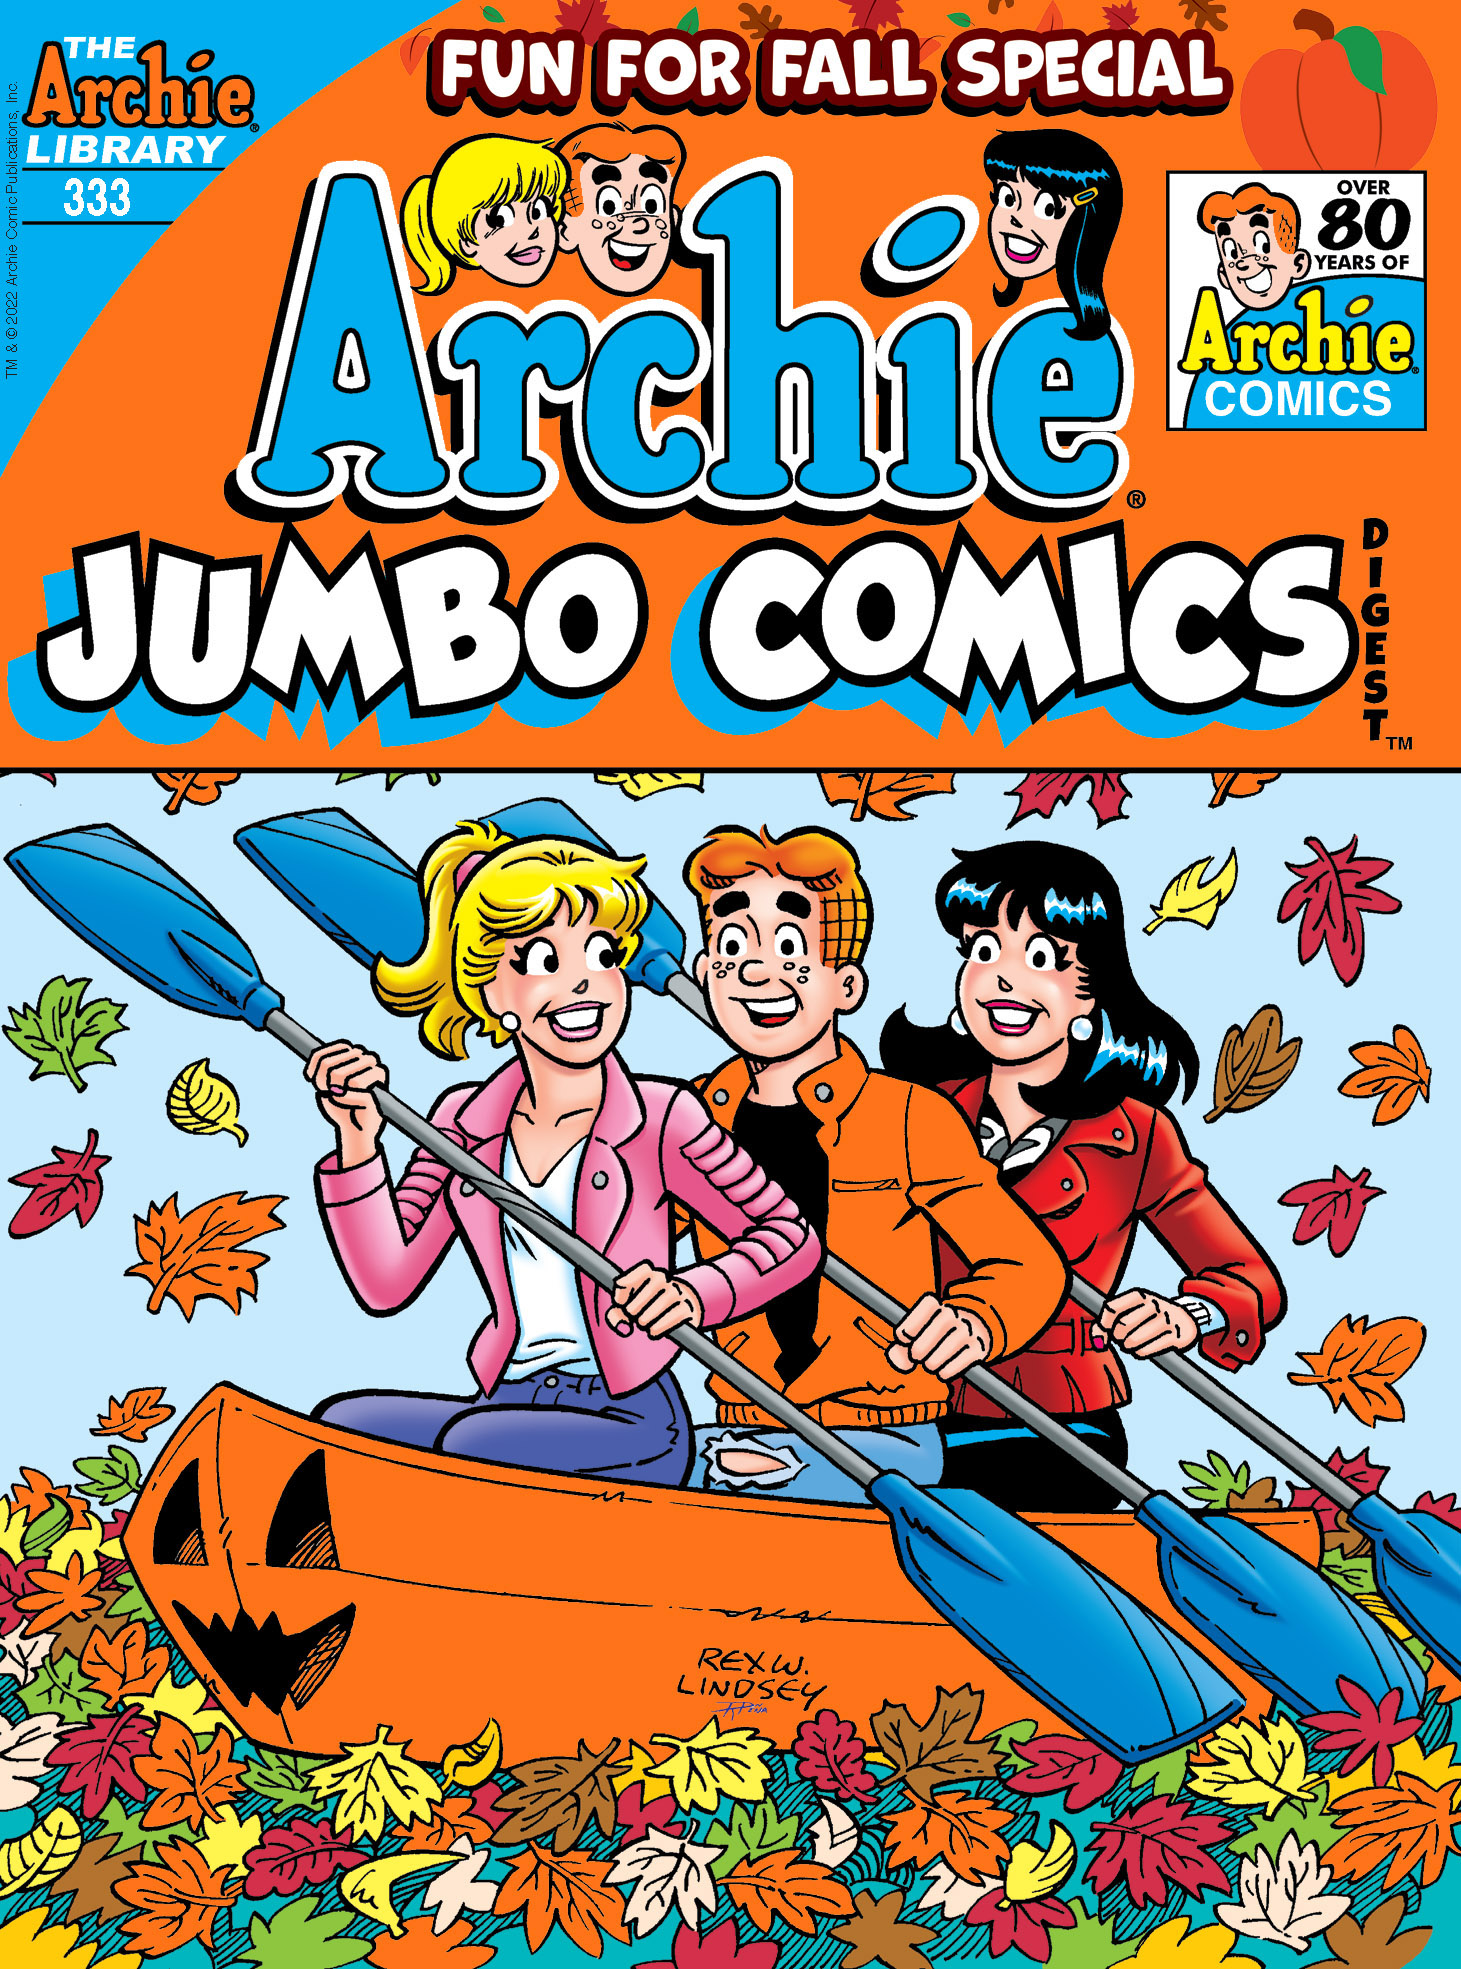 Archie Double Digest #333 by: Archie Superstars - 9781645767152 | RedShelf